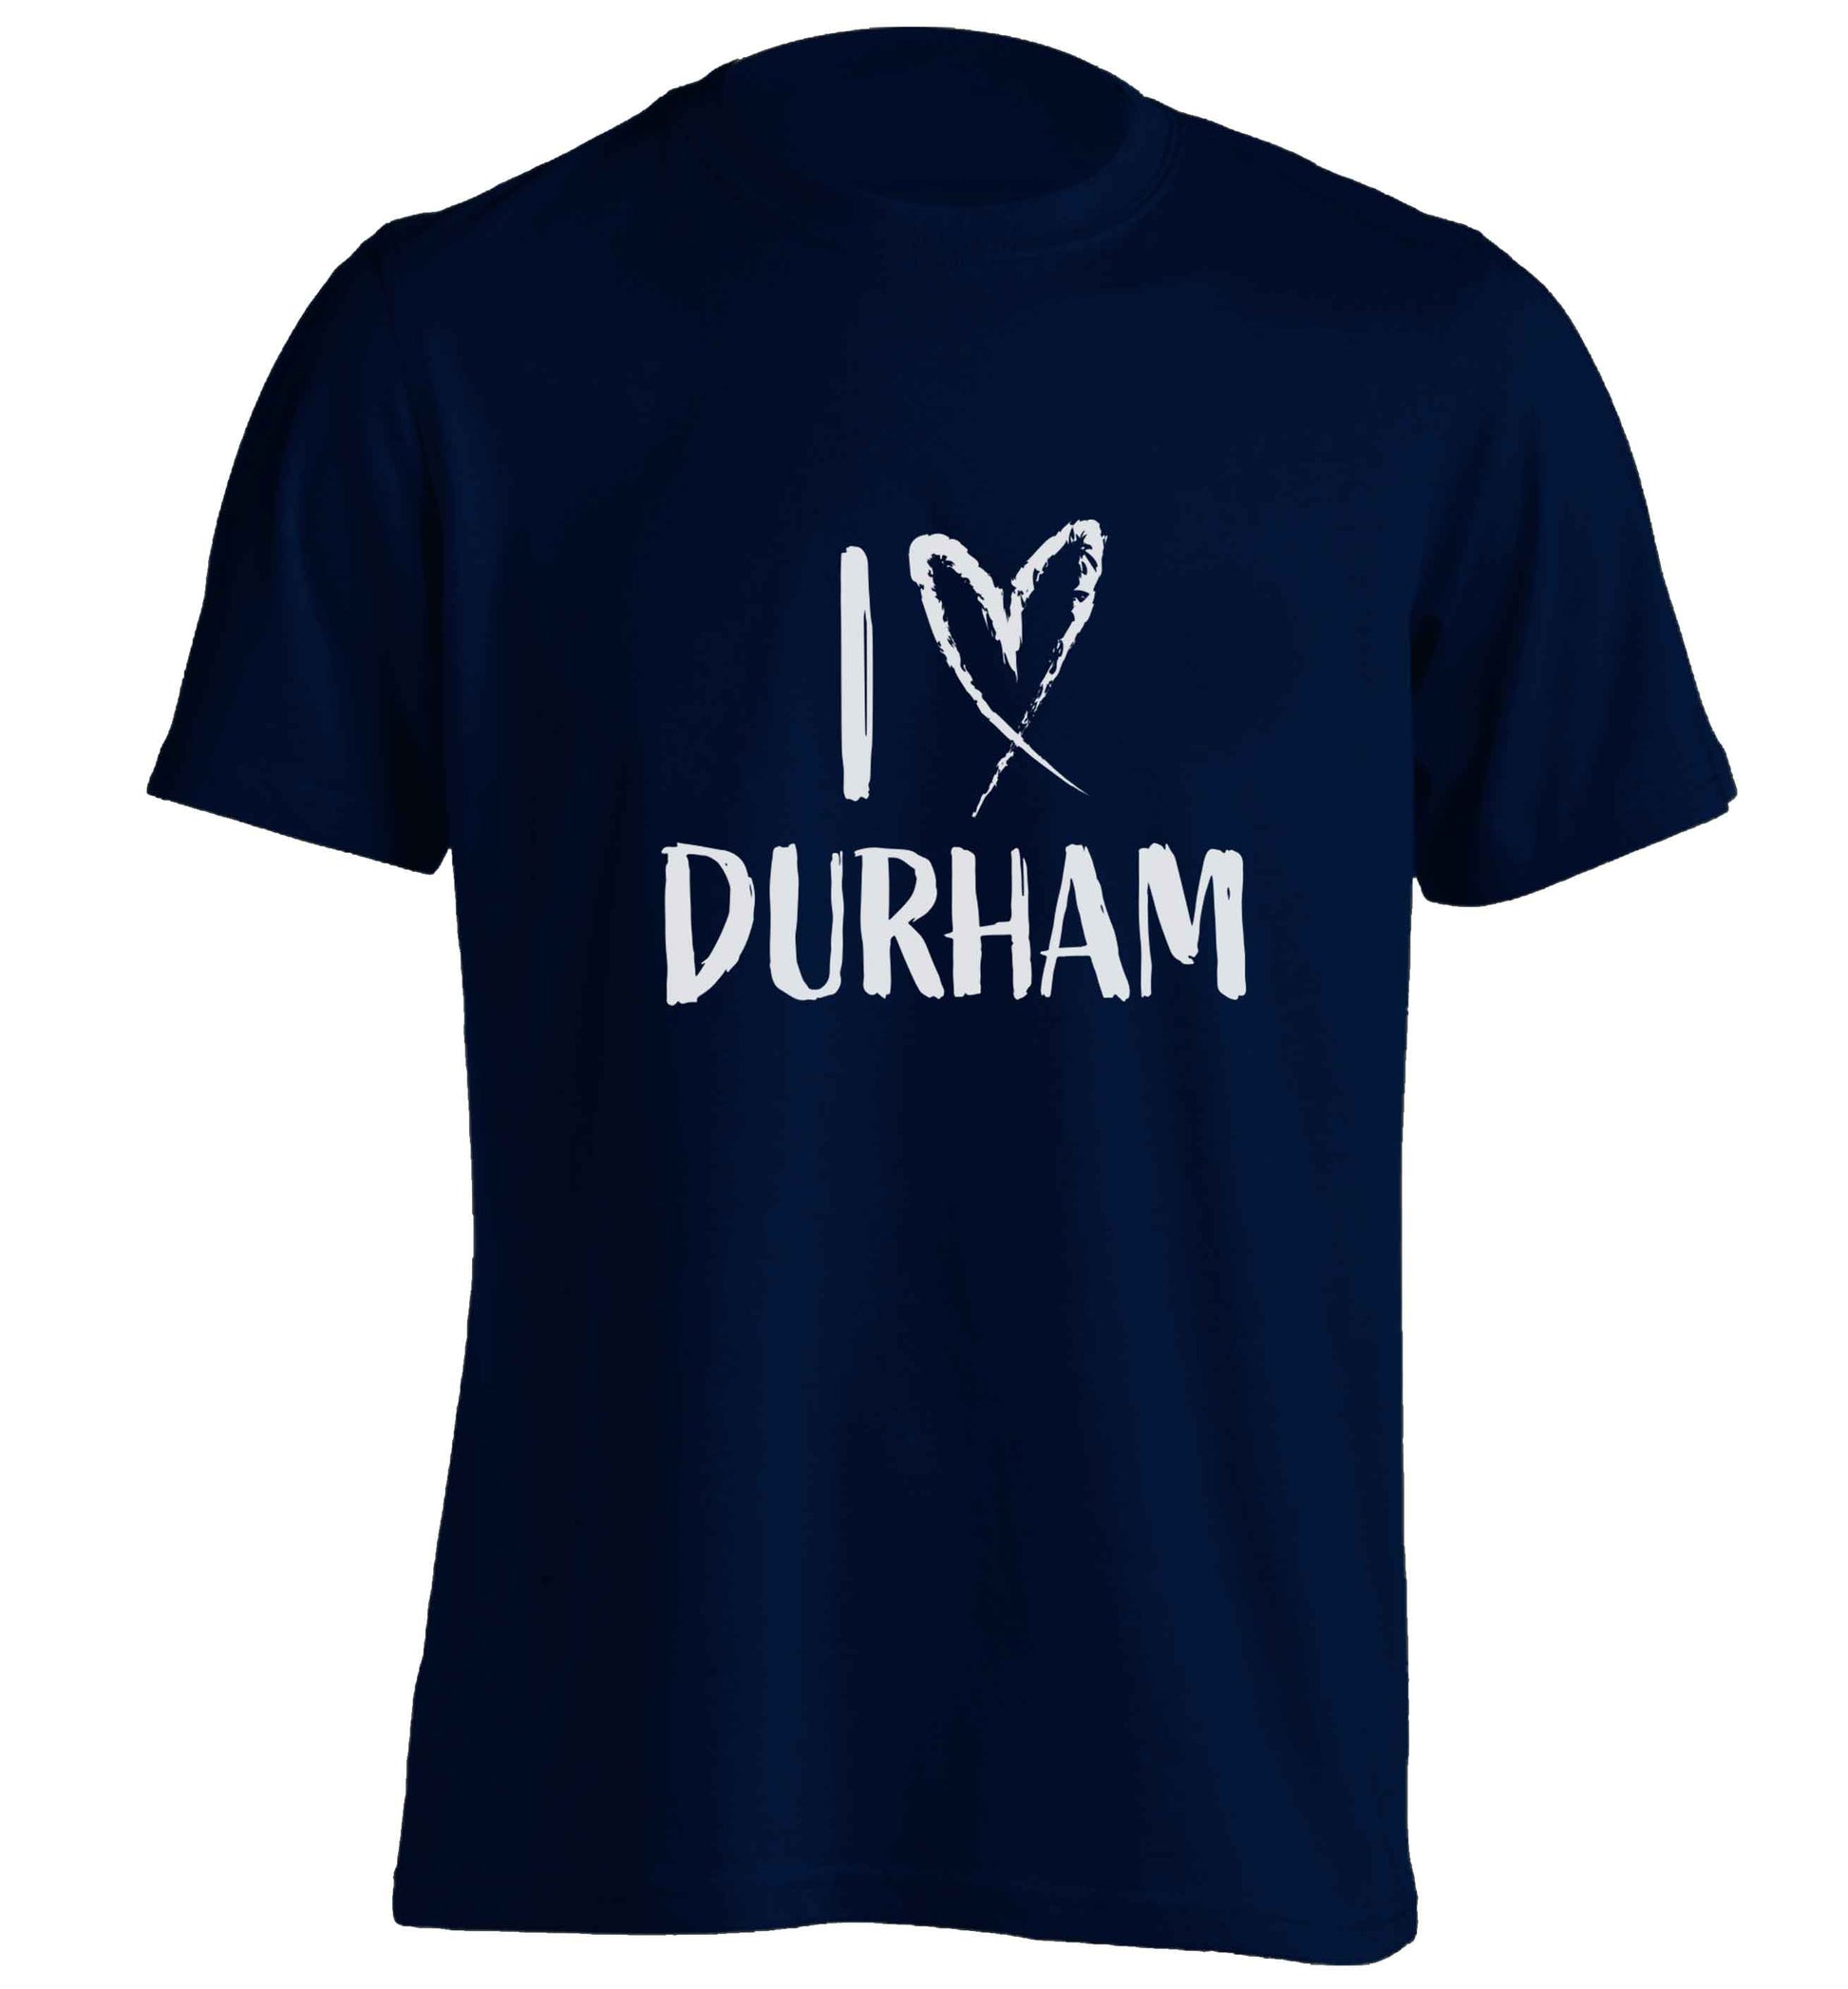 I love Durham adults unisex navy Tshirt 2XL